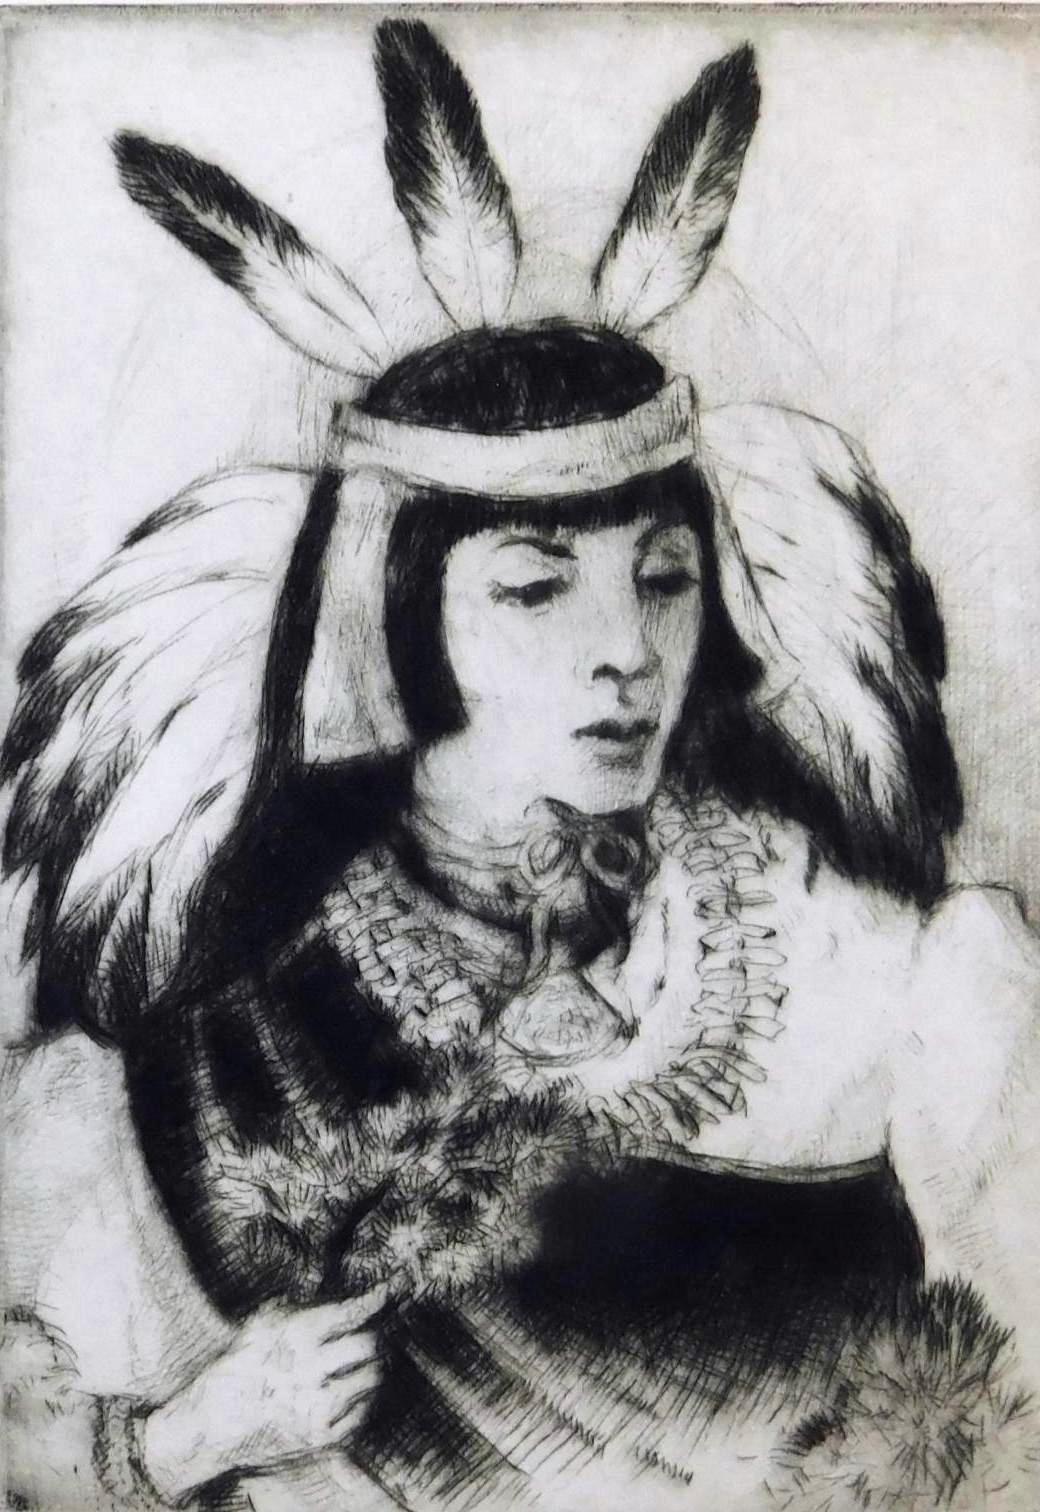 Kaltnadel auf Papier des berühmten Taos-Künstlers Gene Kloss (1903-1996).
Titel: 